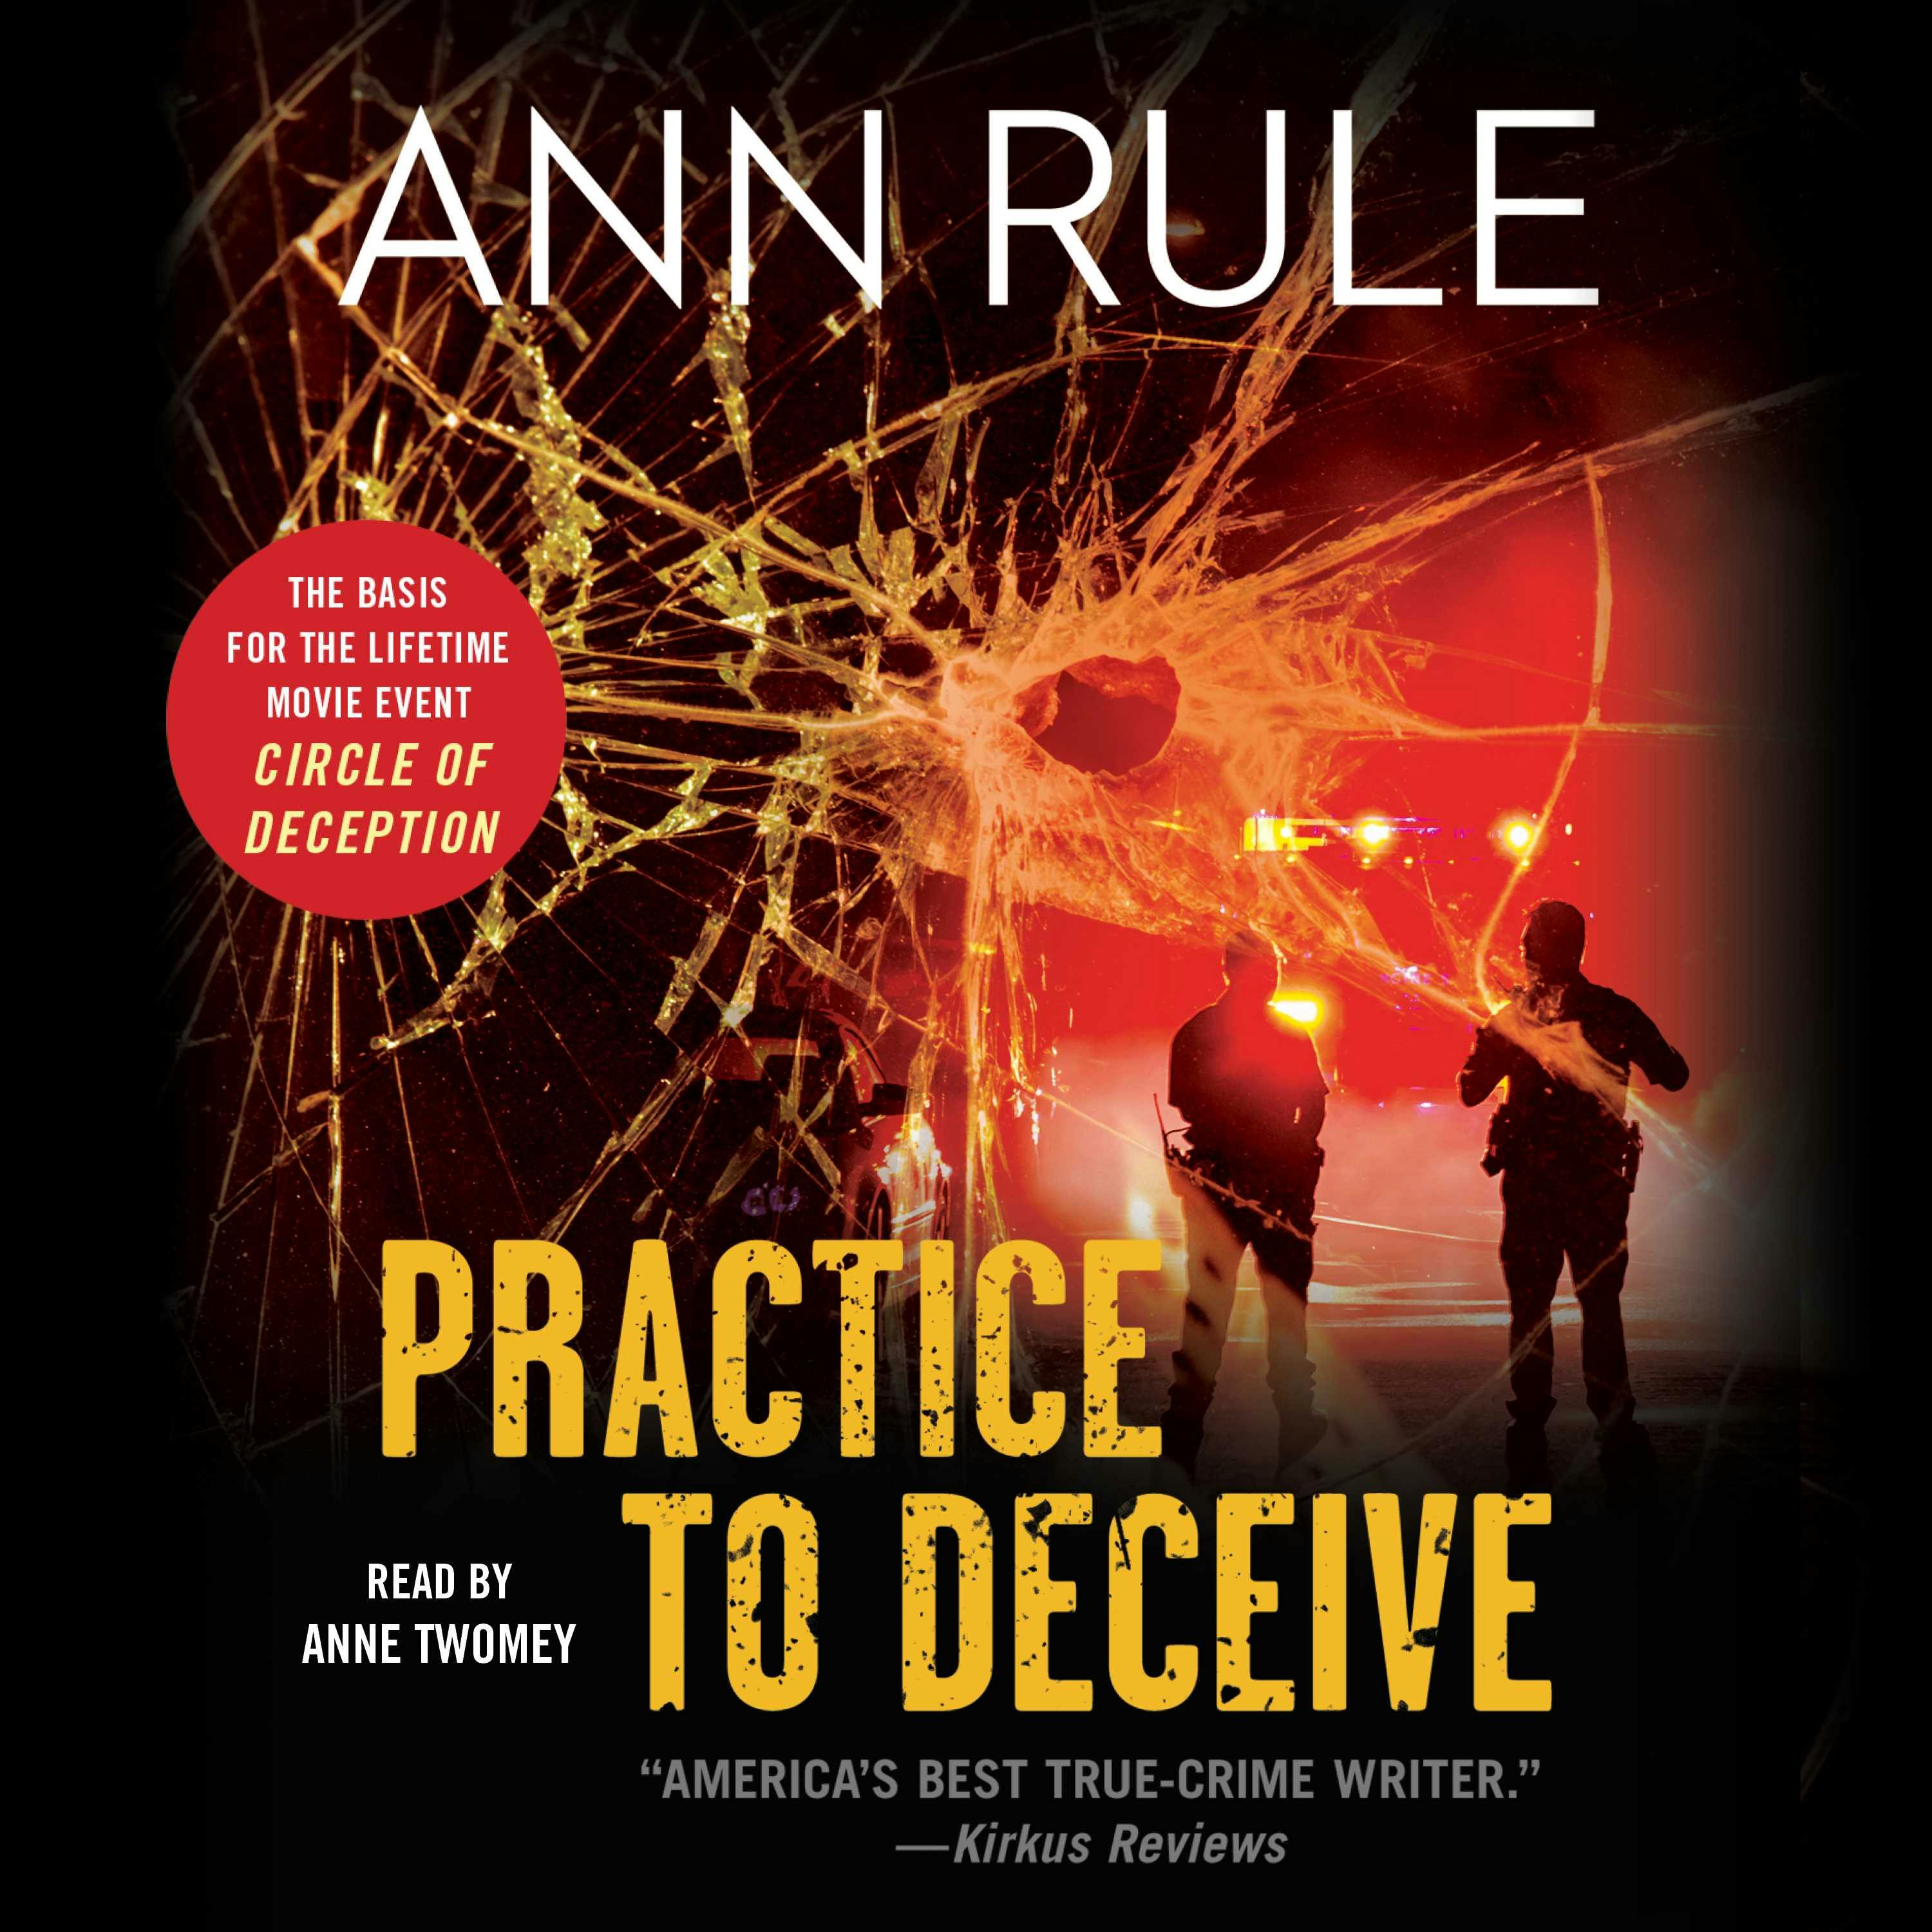 Practice to Deceive - Ann Rule